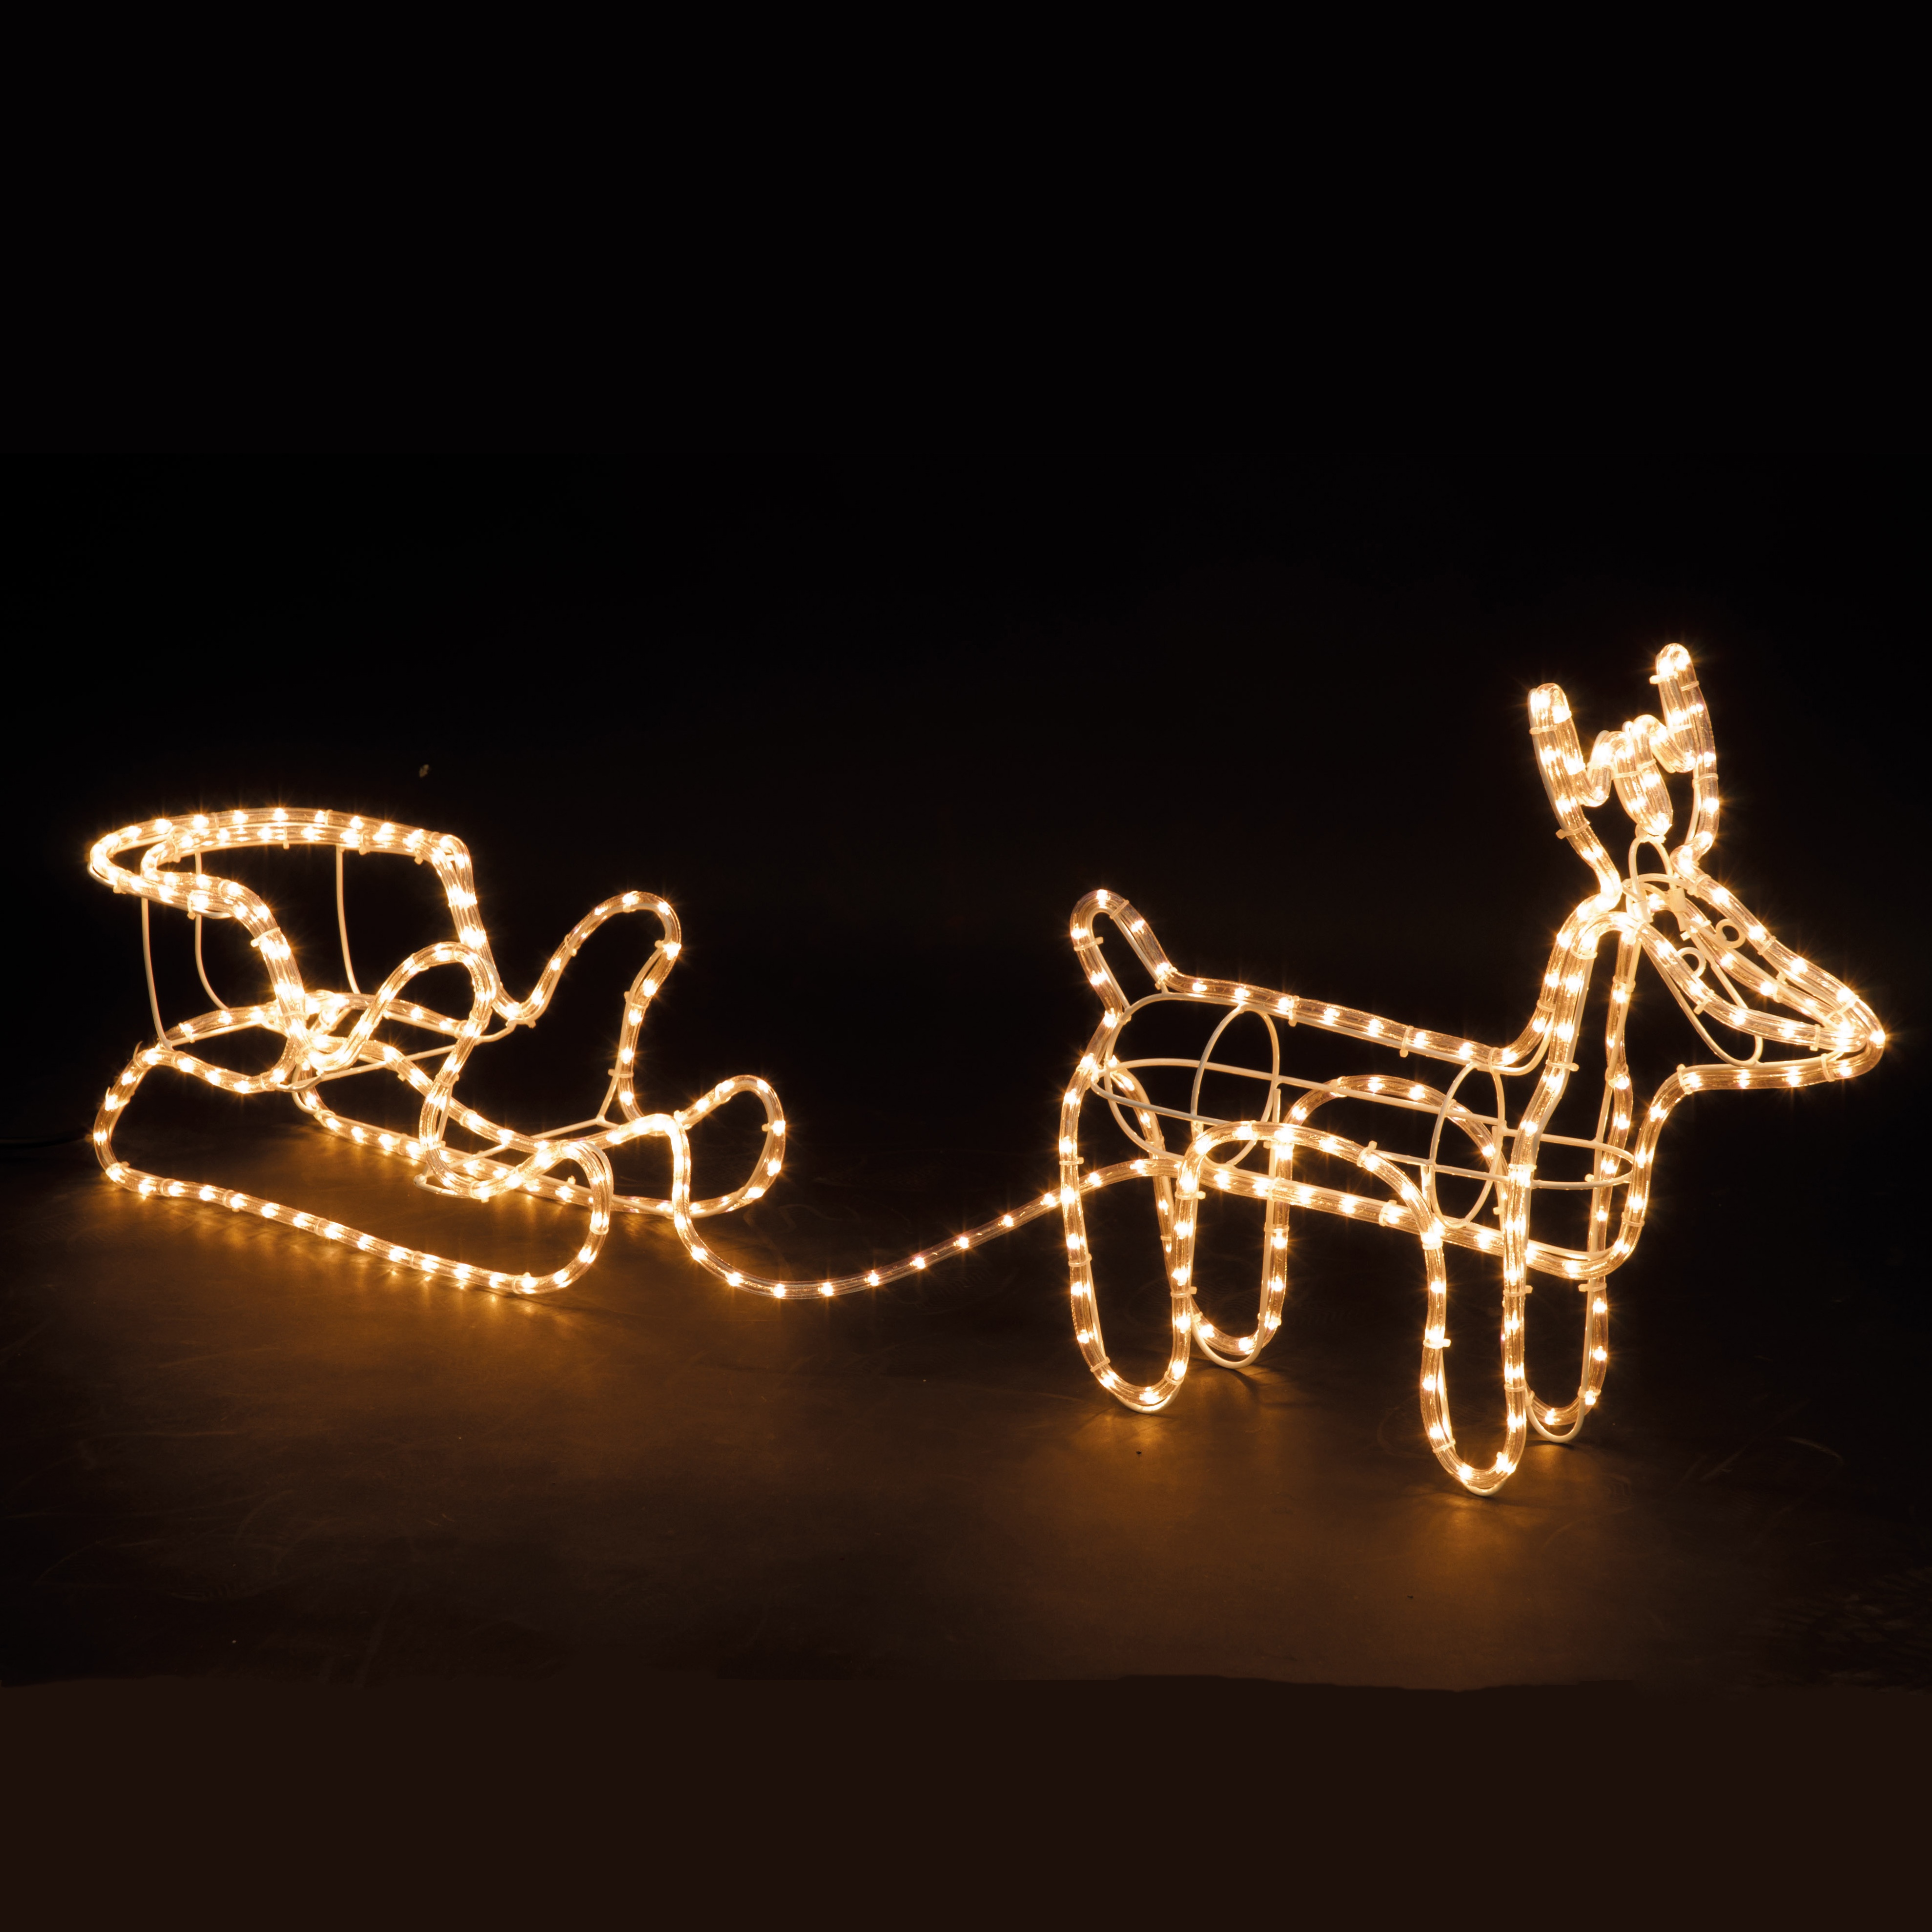 Large Christmas Reindeer Sleigh Light Up Outdoor Garden Rope